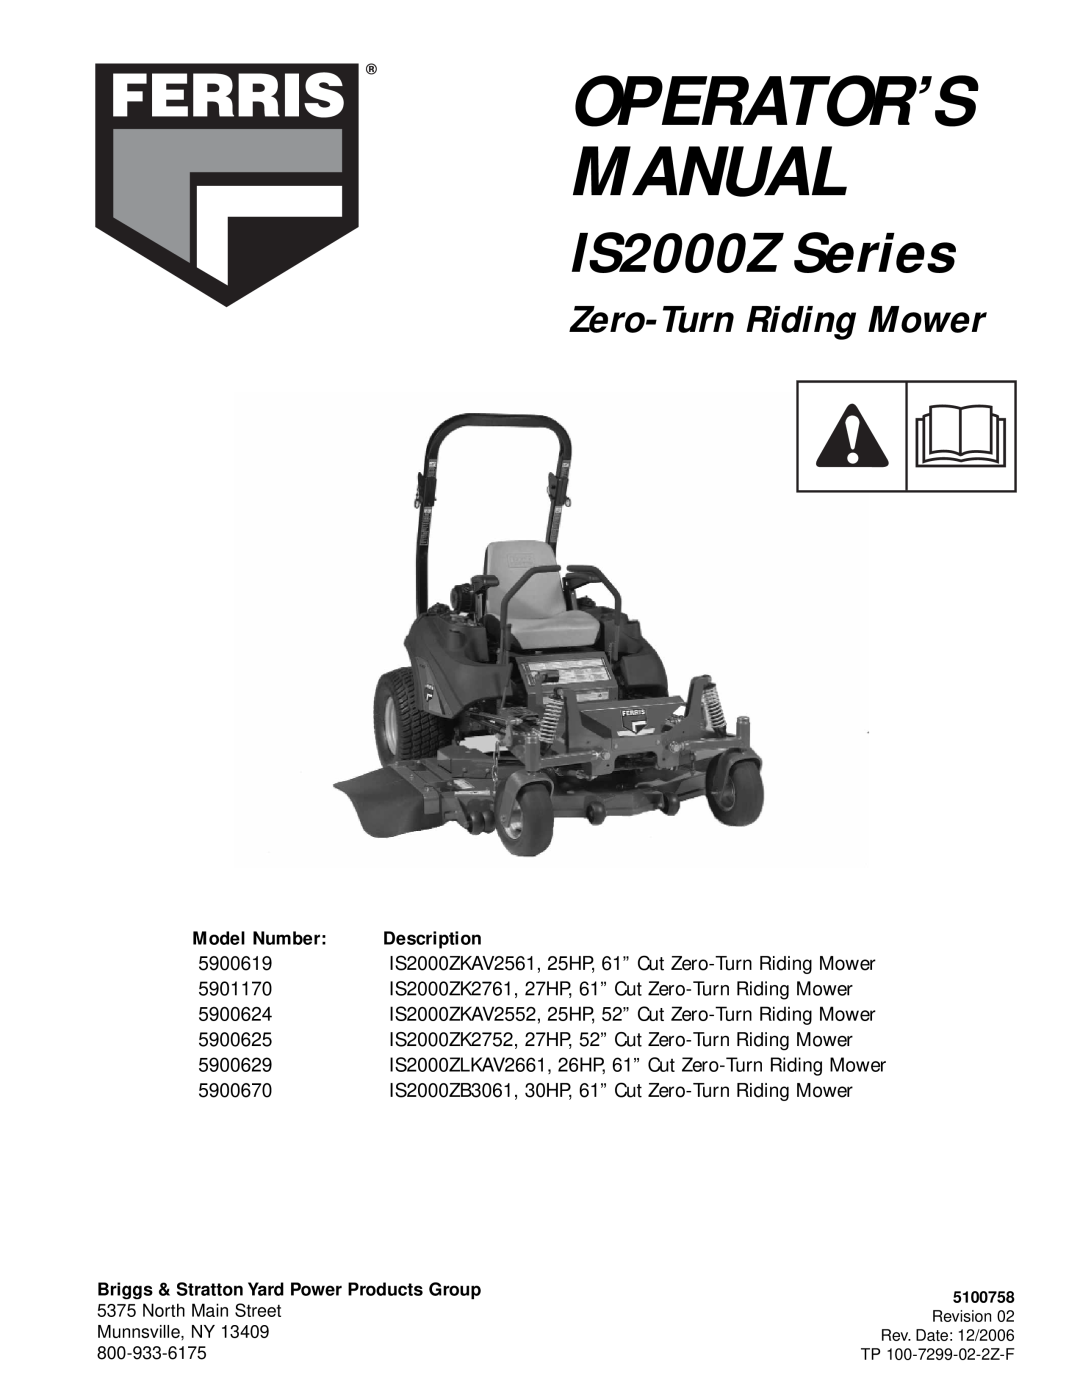 Briggs & Stratton 5900625, 5901170, 5900629 manual IS2000Z Series, Zero-Turn Riding Mower, Manual, Operator’S, Description 